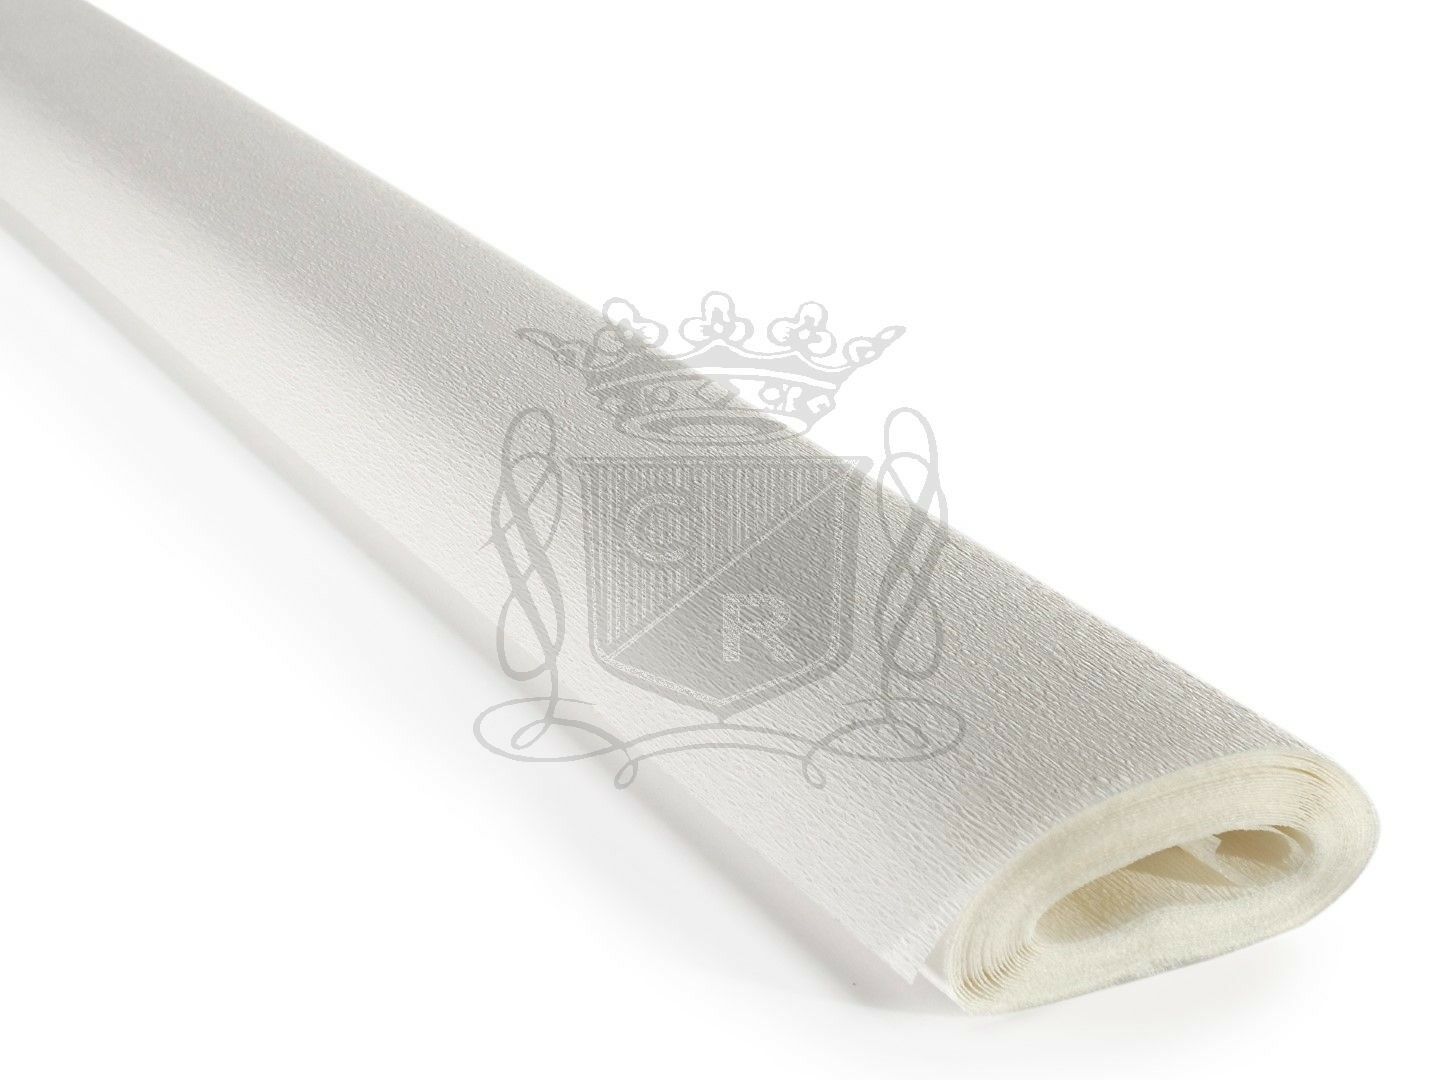 İtalyan Krapon Kağıdı No:330 - White 60 gr. 50*250 cm